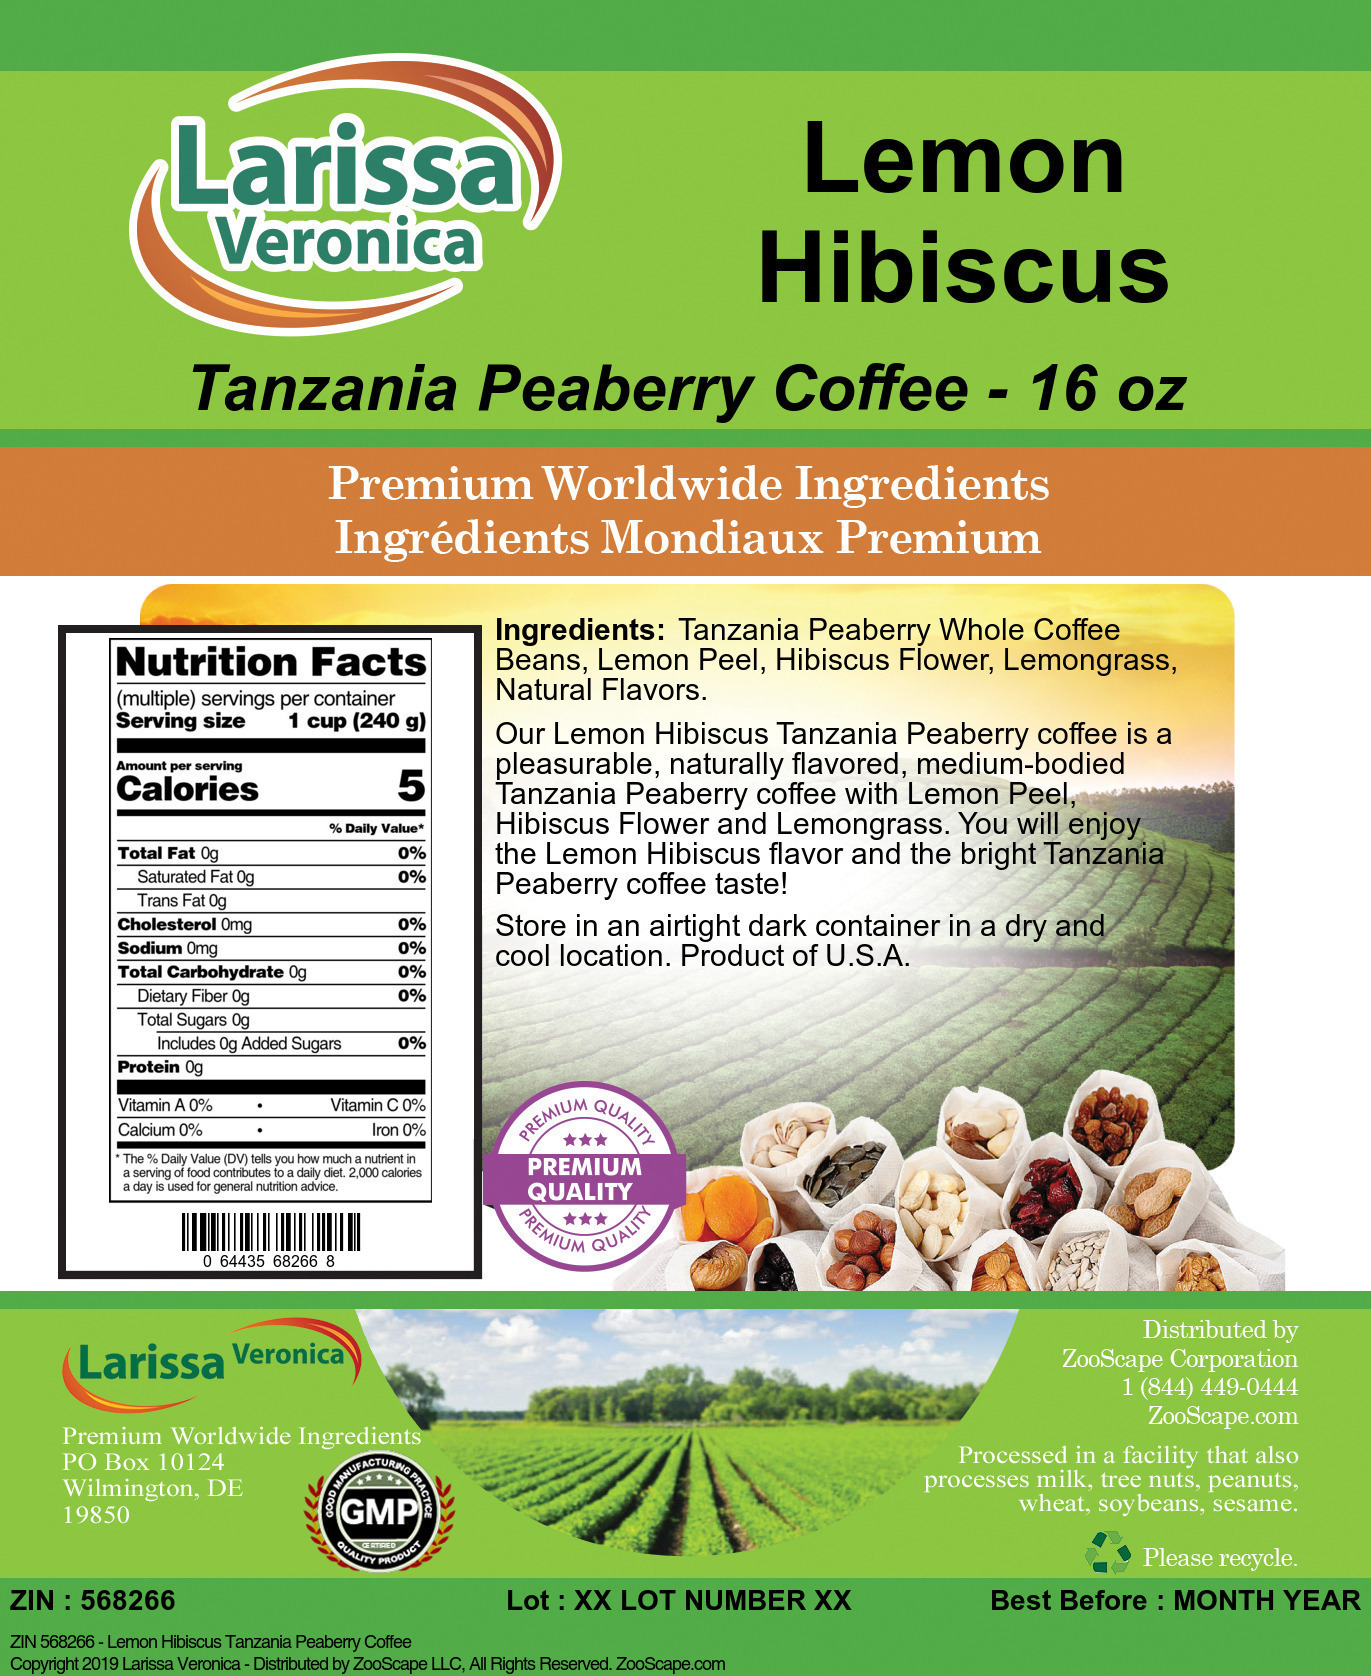 Lemon Hibiscus Tanzania Peaberry Coffee - Label